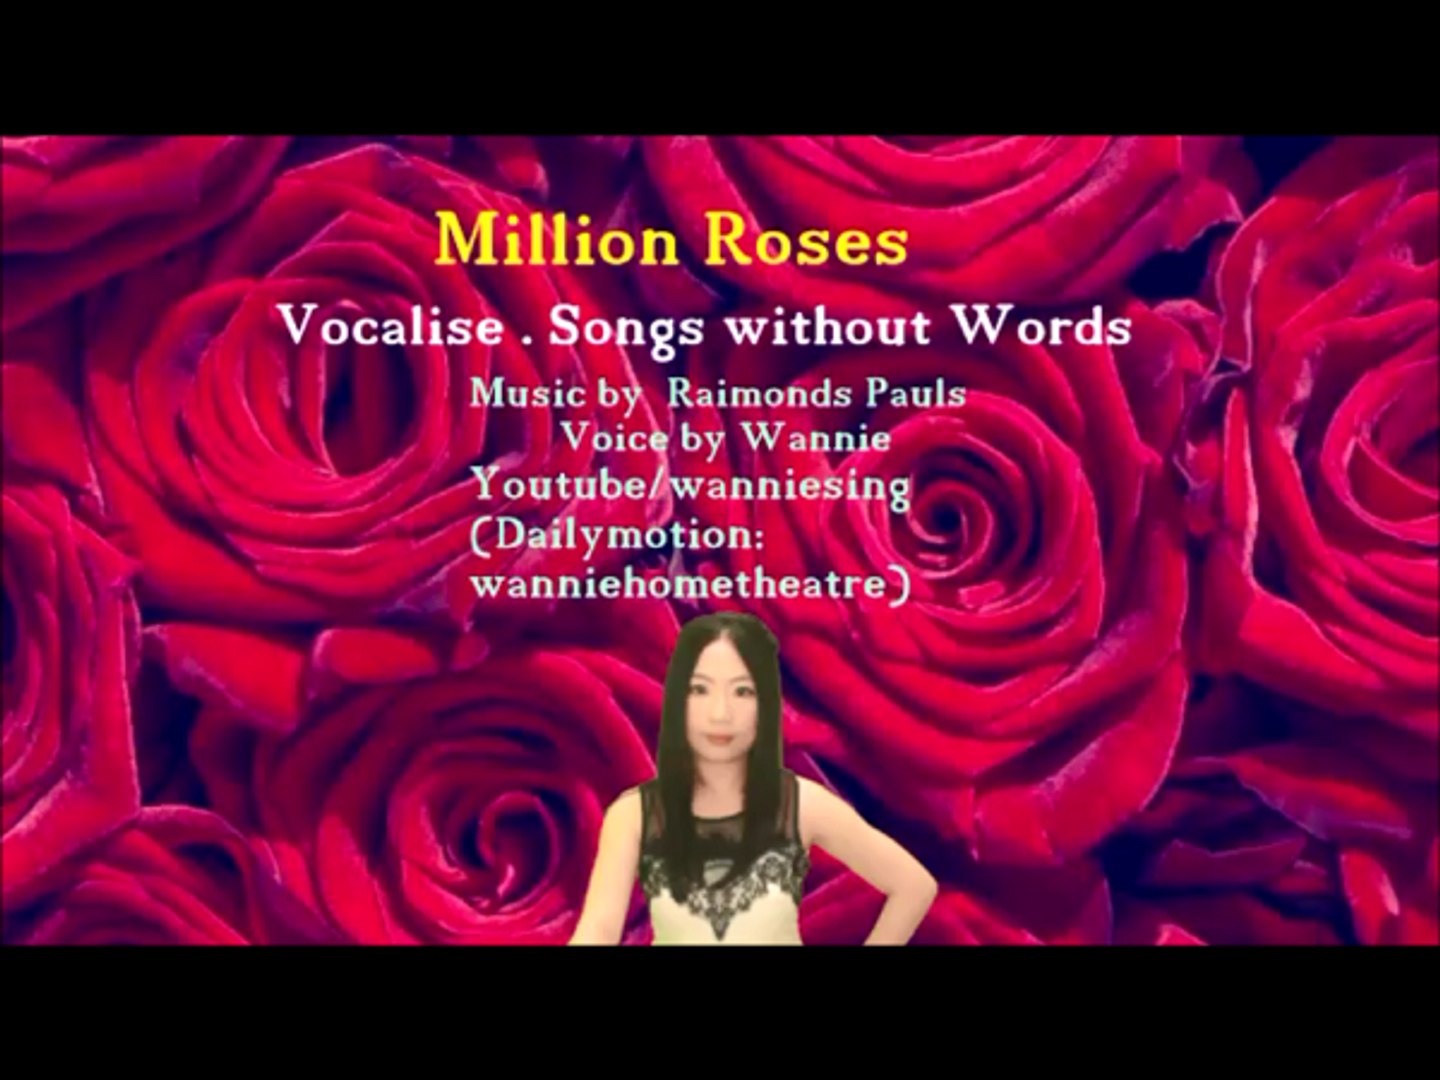 Песня розы маи. Миллион алых роз французы поют. Исполнение миллиона алых роз. Миллион алых роз на французском исполняют французы.